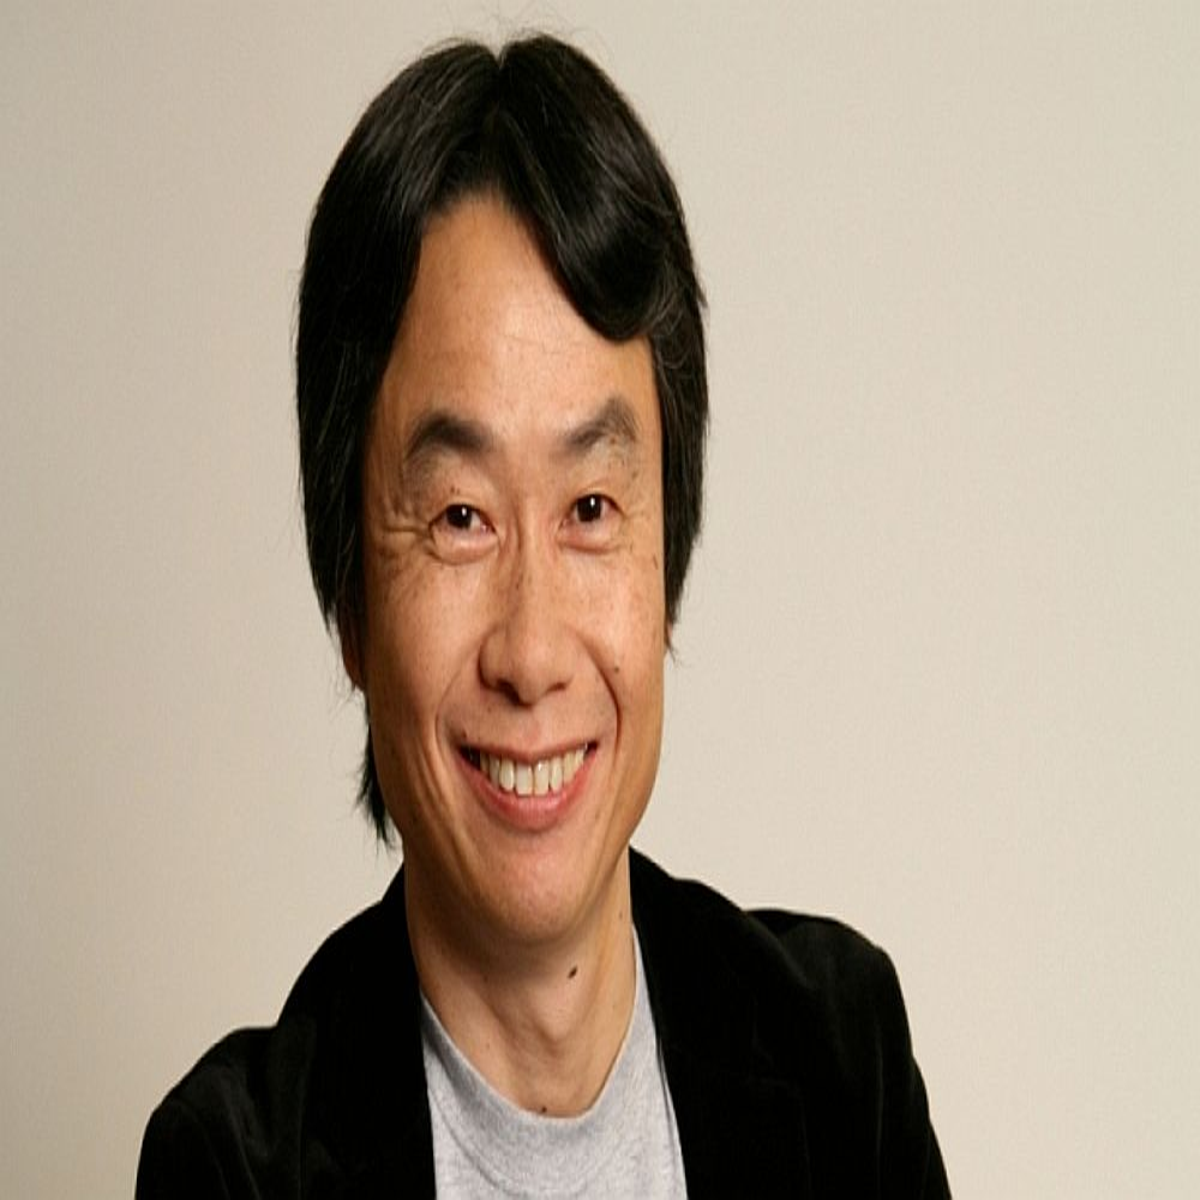 Star Fox Zero preview, Shigeru Miyamoto interview